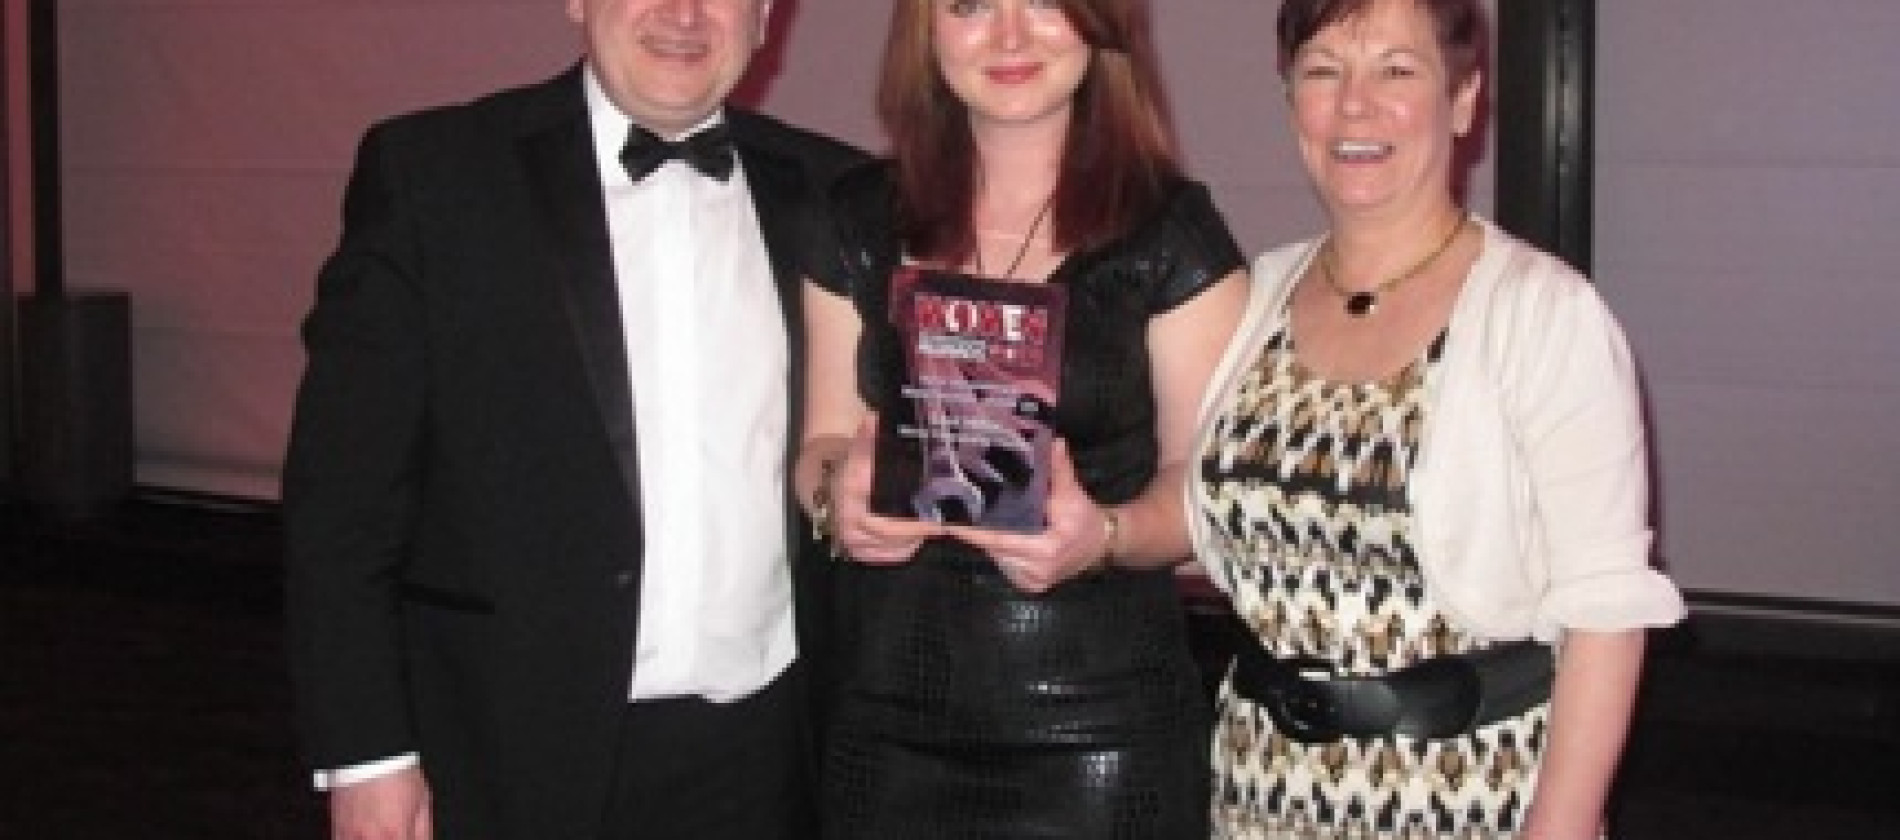 Lisa (centre) after winning Women in Construction Award 2013